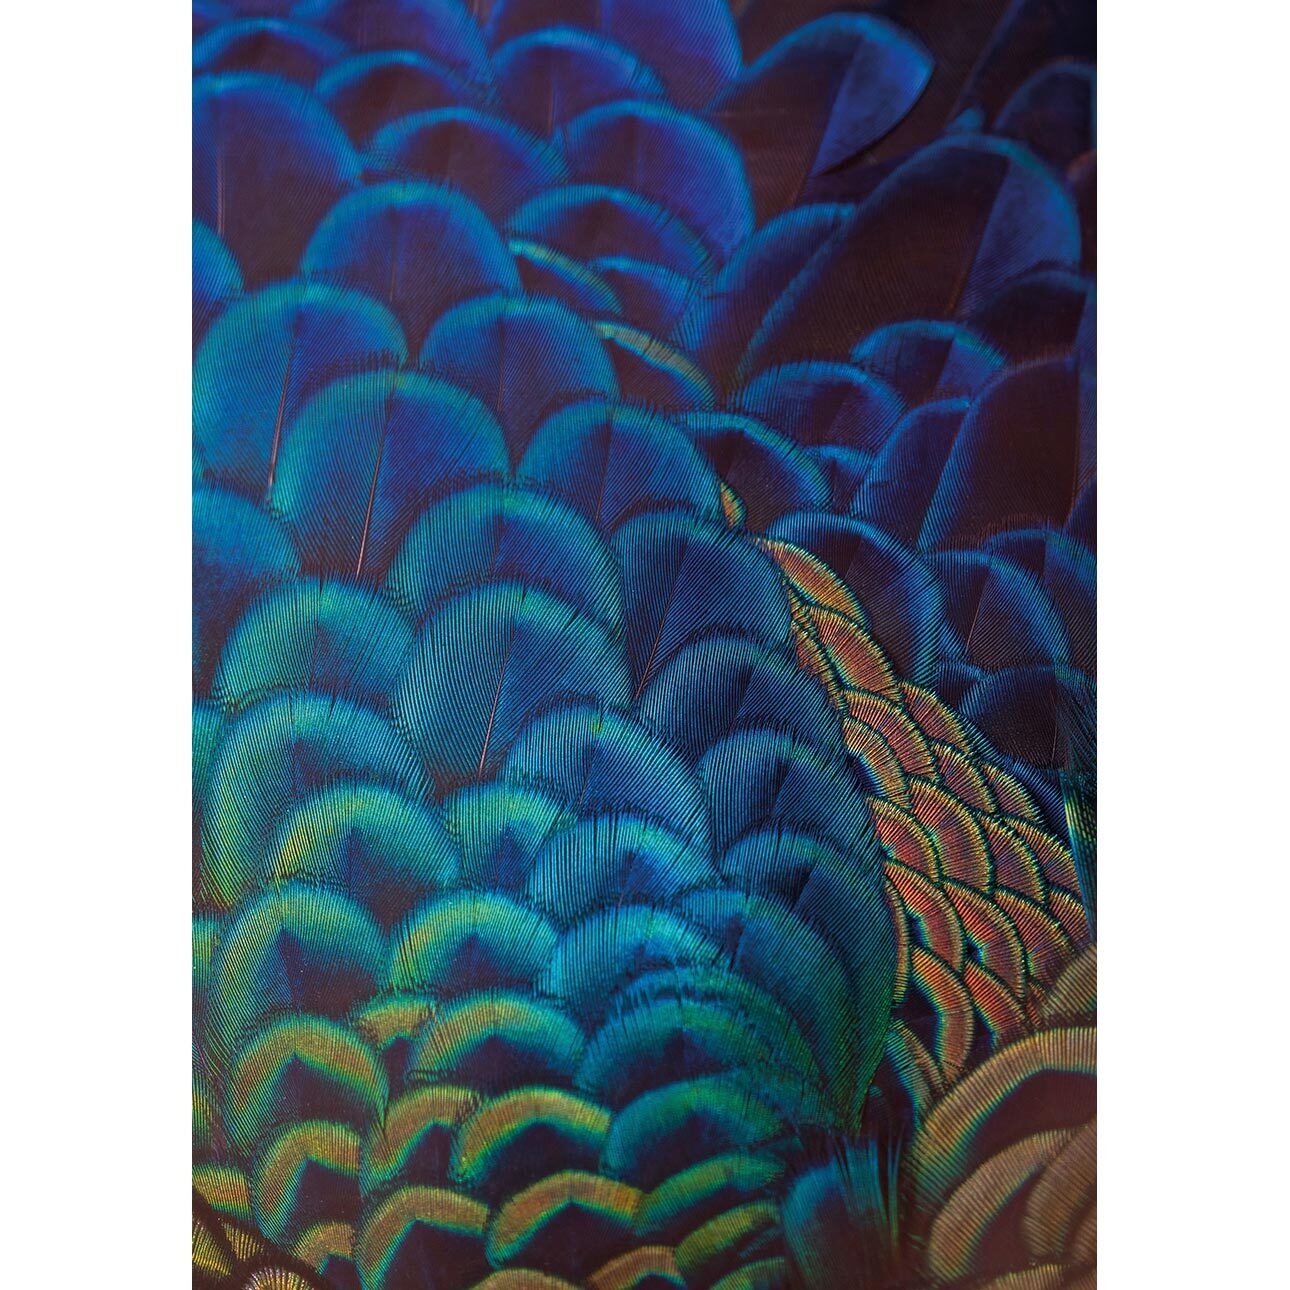 Leinwandbild Multicolor Feathers, 35 x 50 cm günstig online kaufen